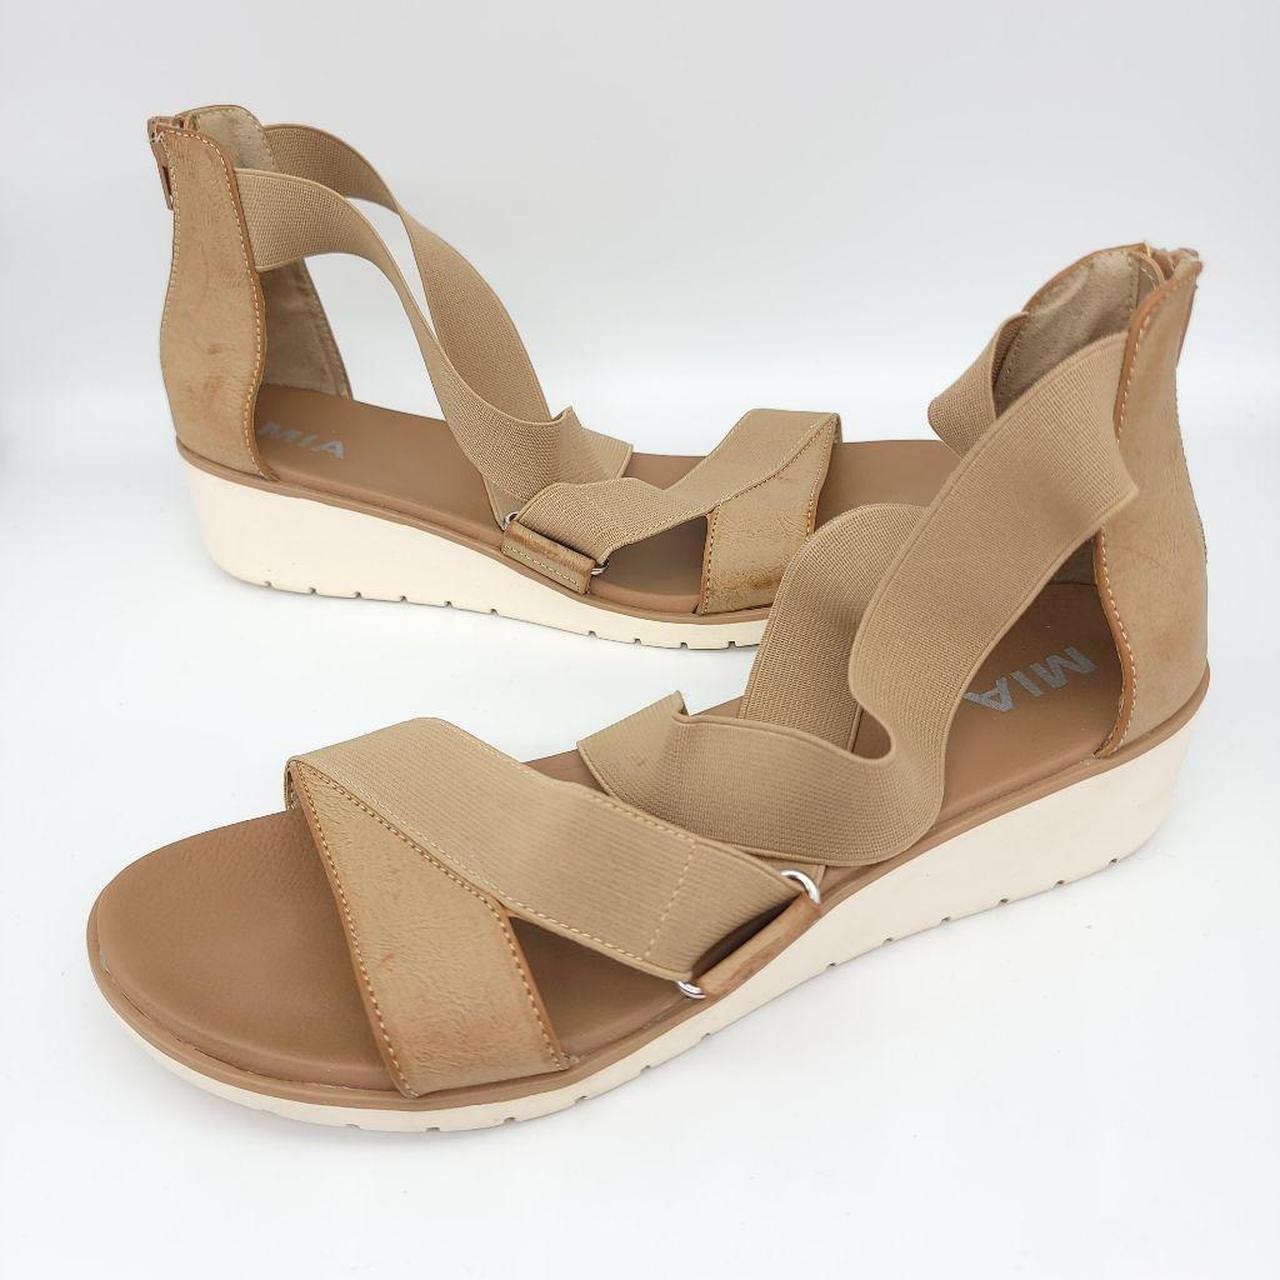 Product Image 2 - Mia Sandals Tan Brown Sandal